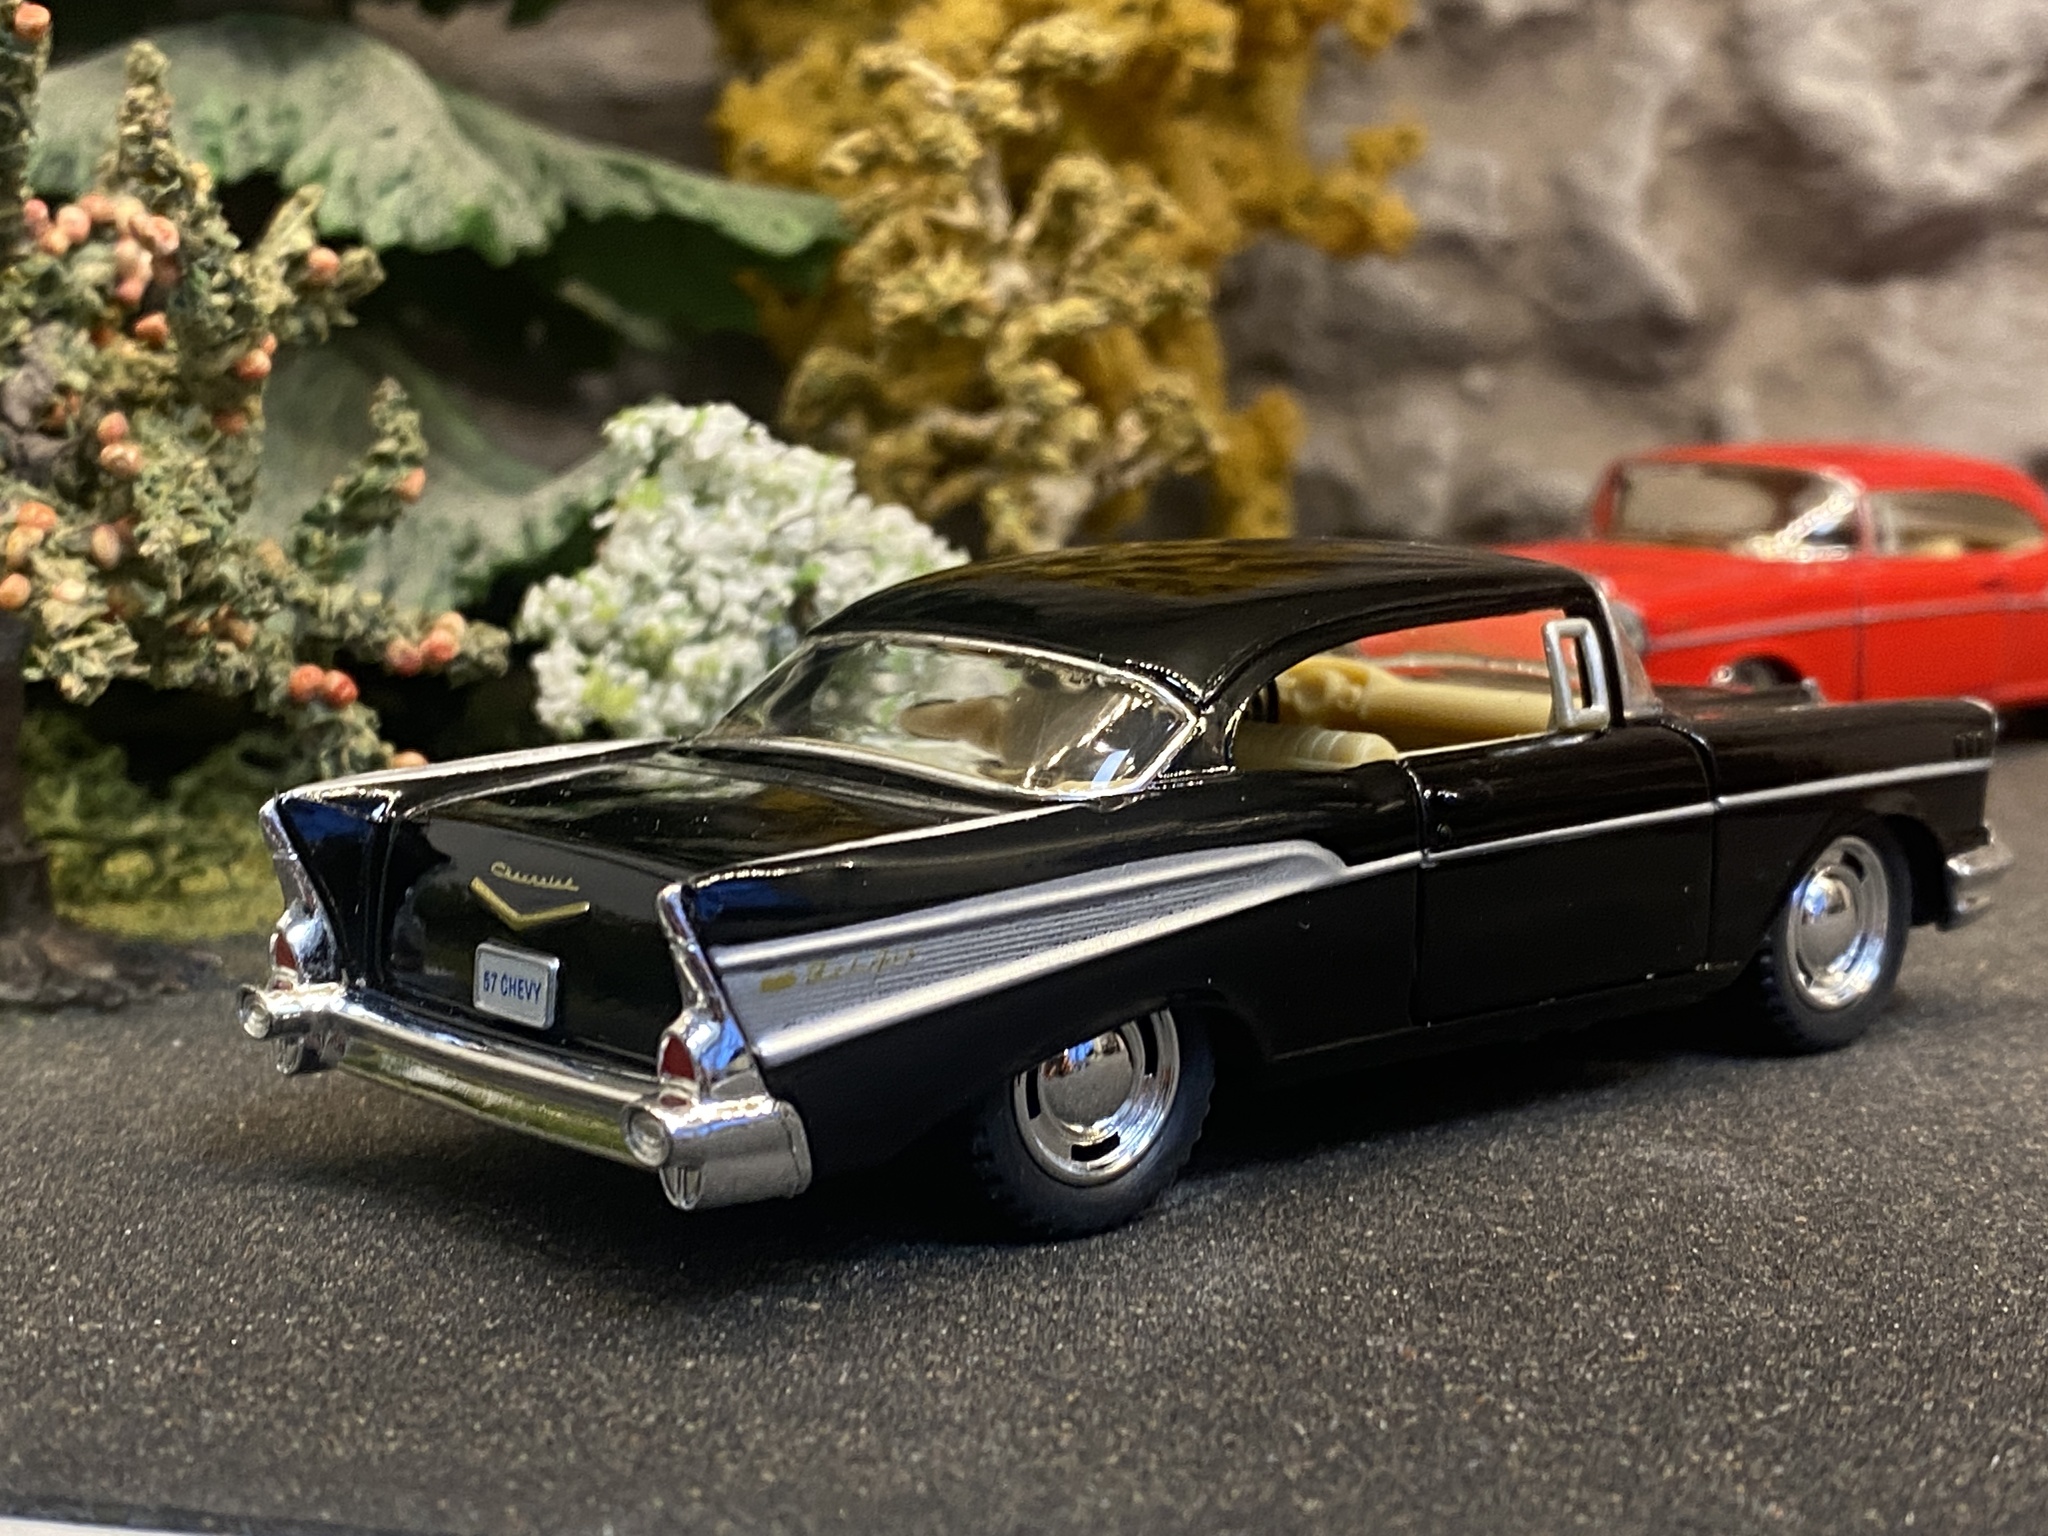 Skala 1/43 (1/40) Chevrolet Bel Air 1957, Black fr Kinsmart